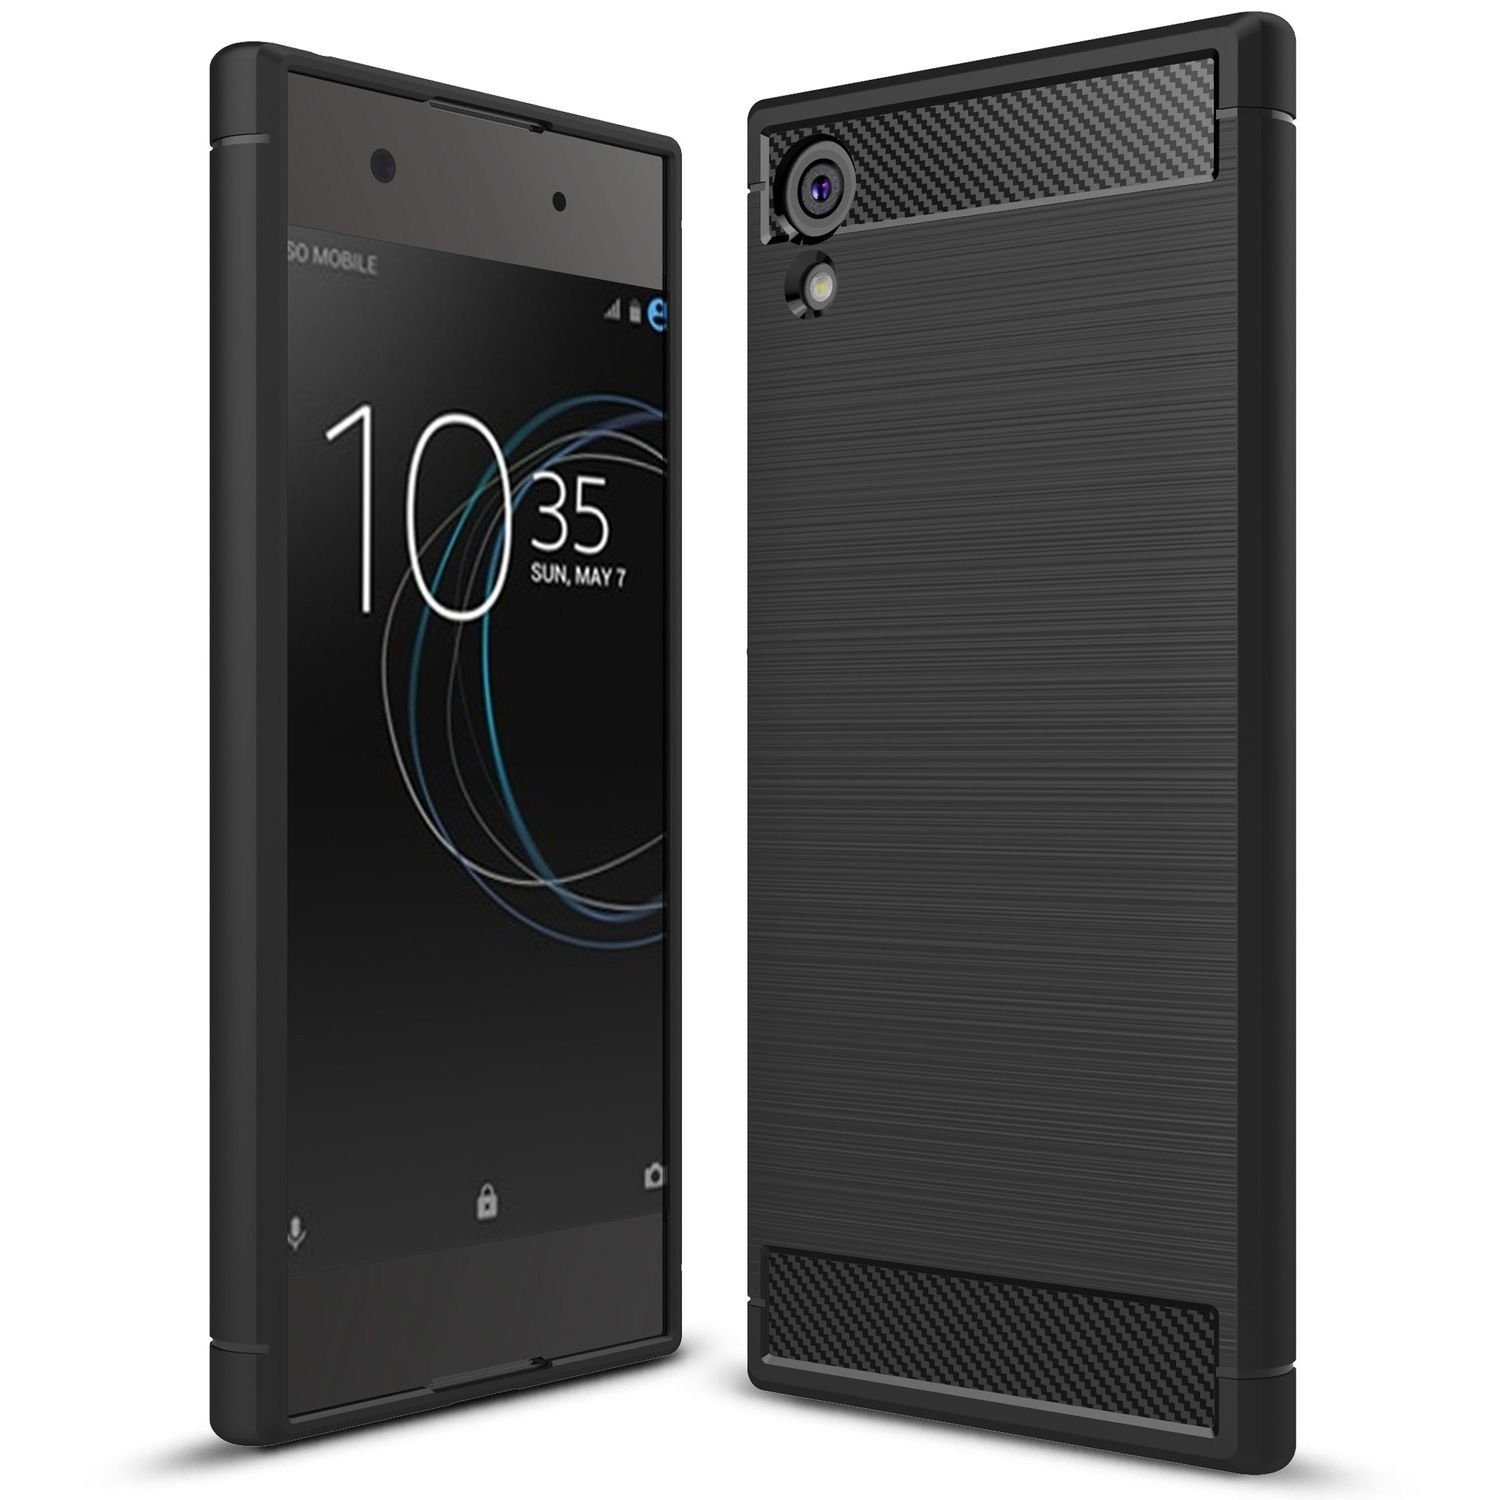 Nalia Smartphone-Hülle Sony Xperia XA1, Carbon Look Silikon Hülle / Matt Schwarz / Rutschfest / Karbon Optik